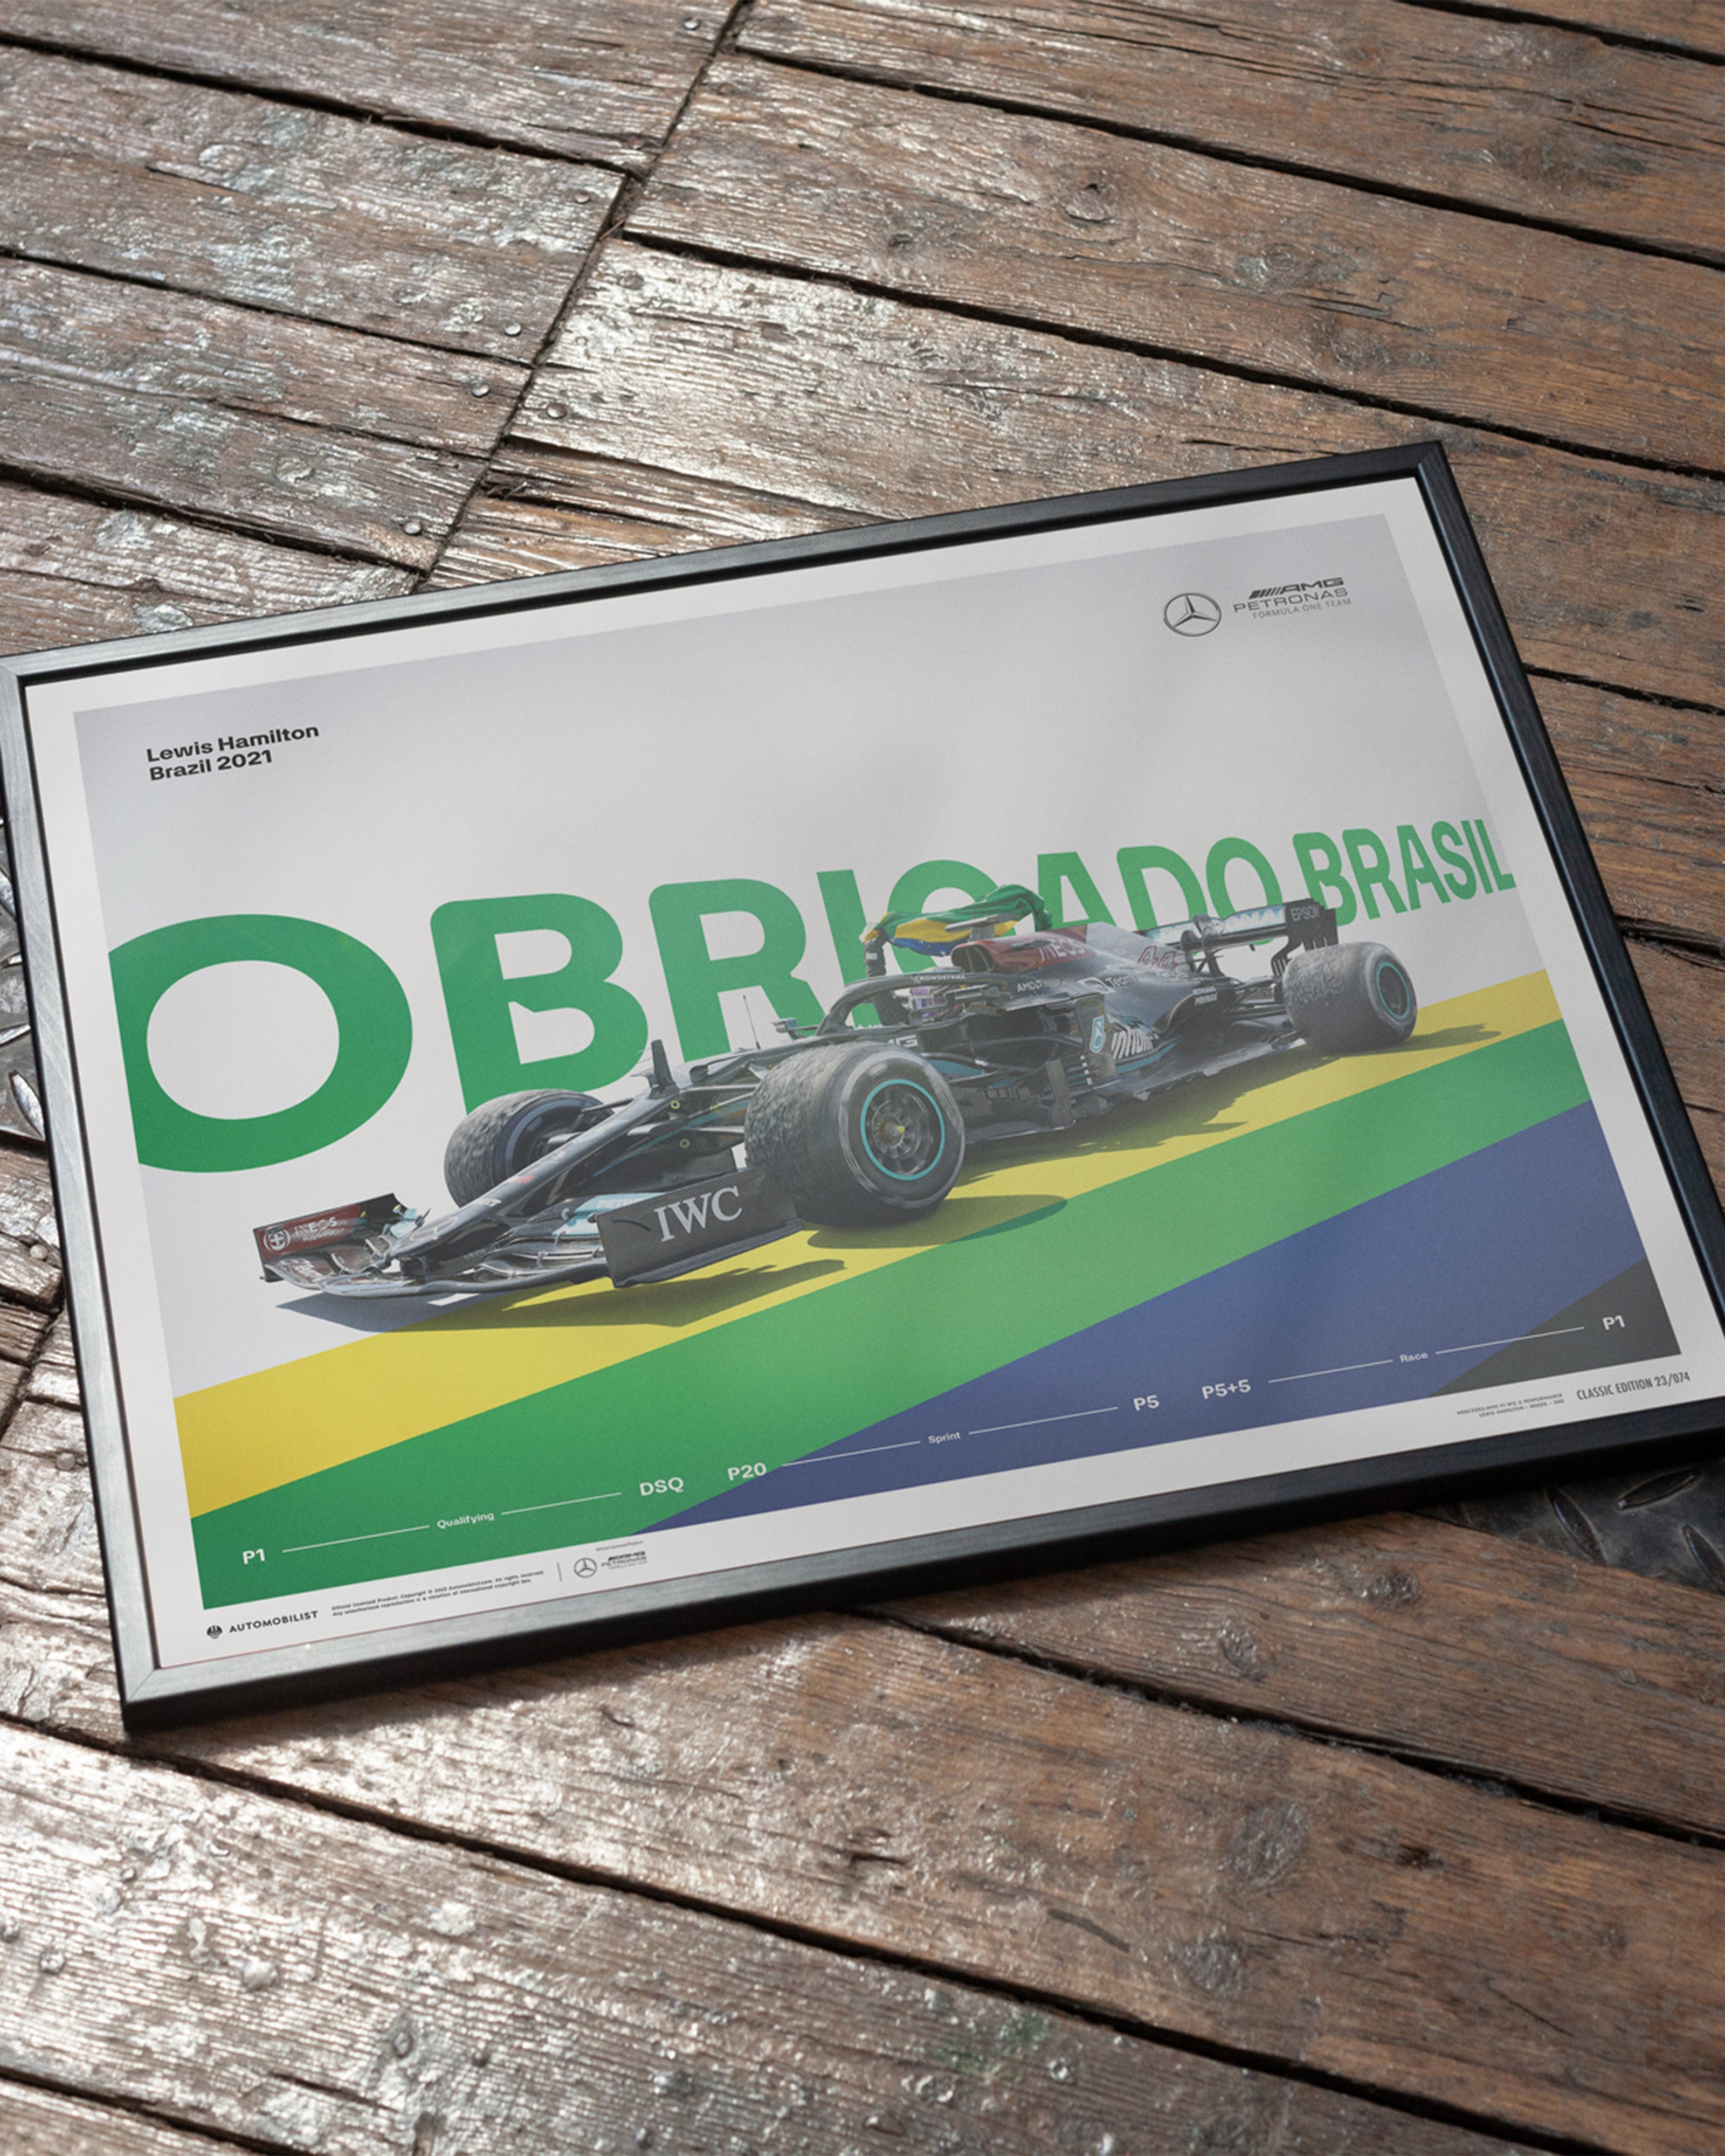 Lewis Hamilton - Obrigado Brasil Poster - 2021